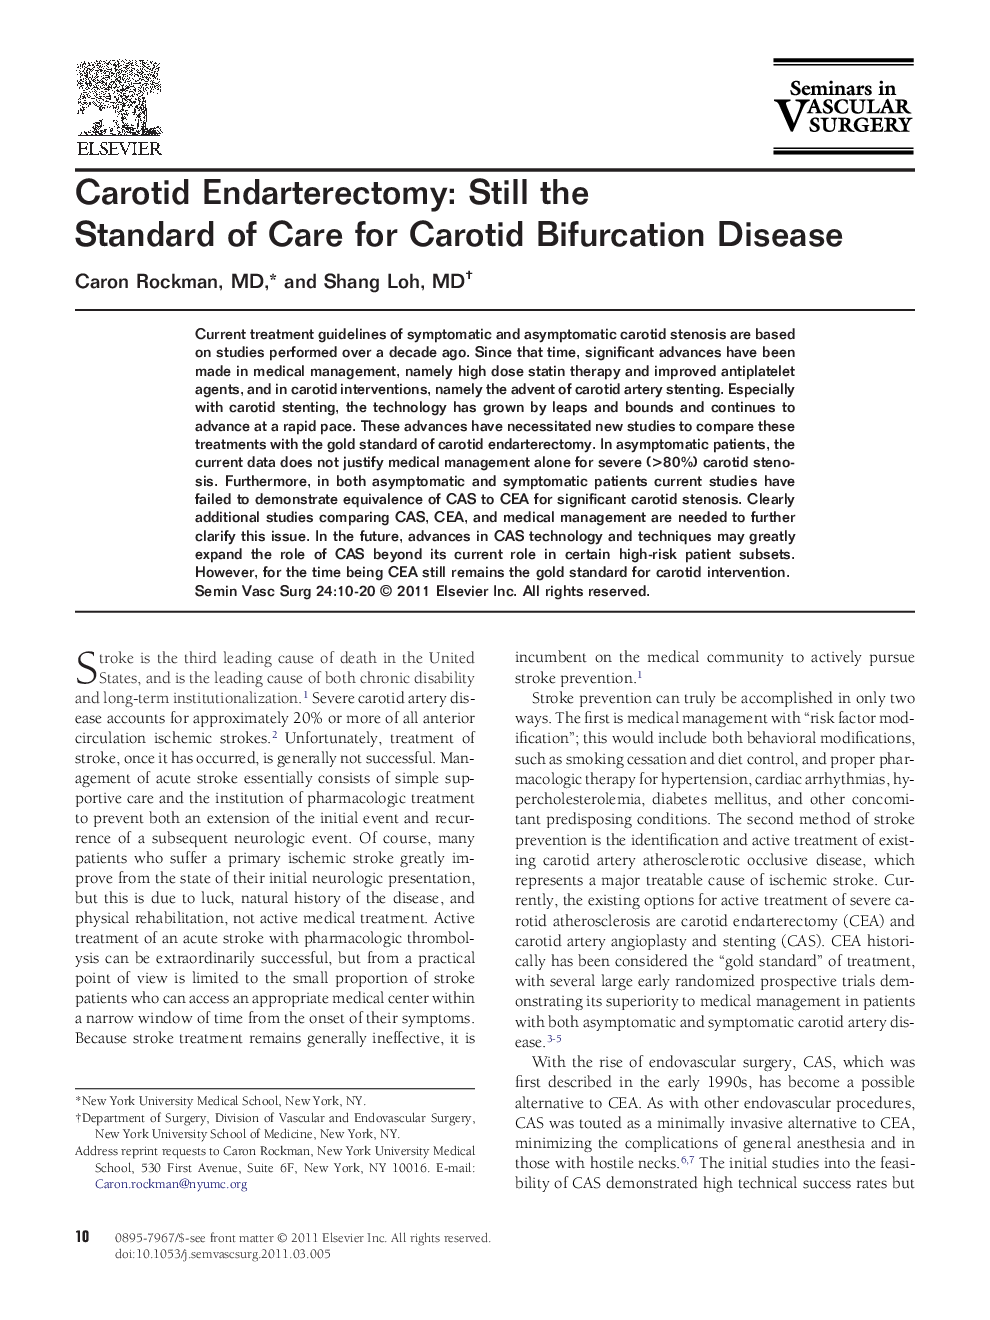 Carotid Endarterectomy: Still the Standard of Care for Carotid Bifurcation Disease